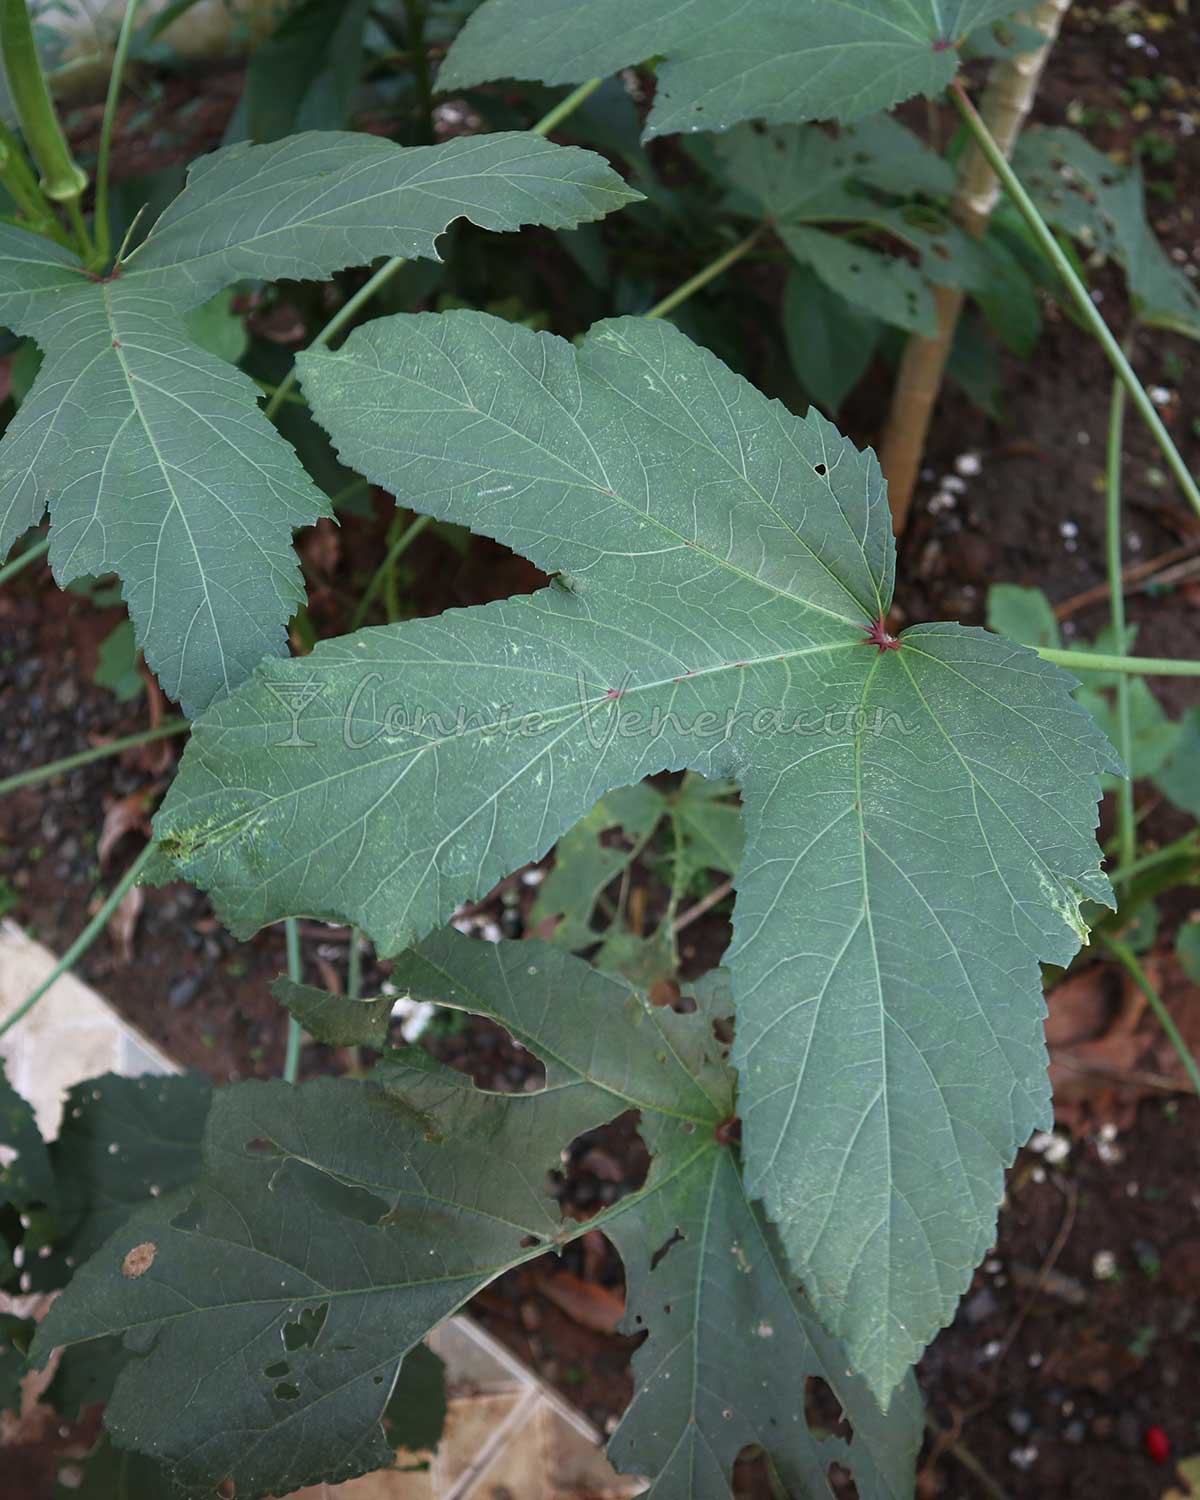 Okra leaves are edible